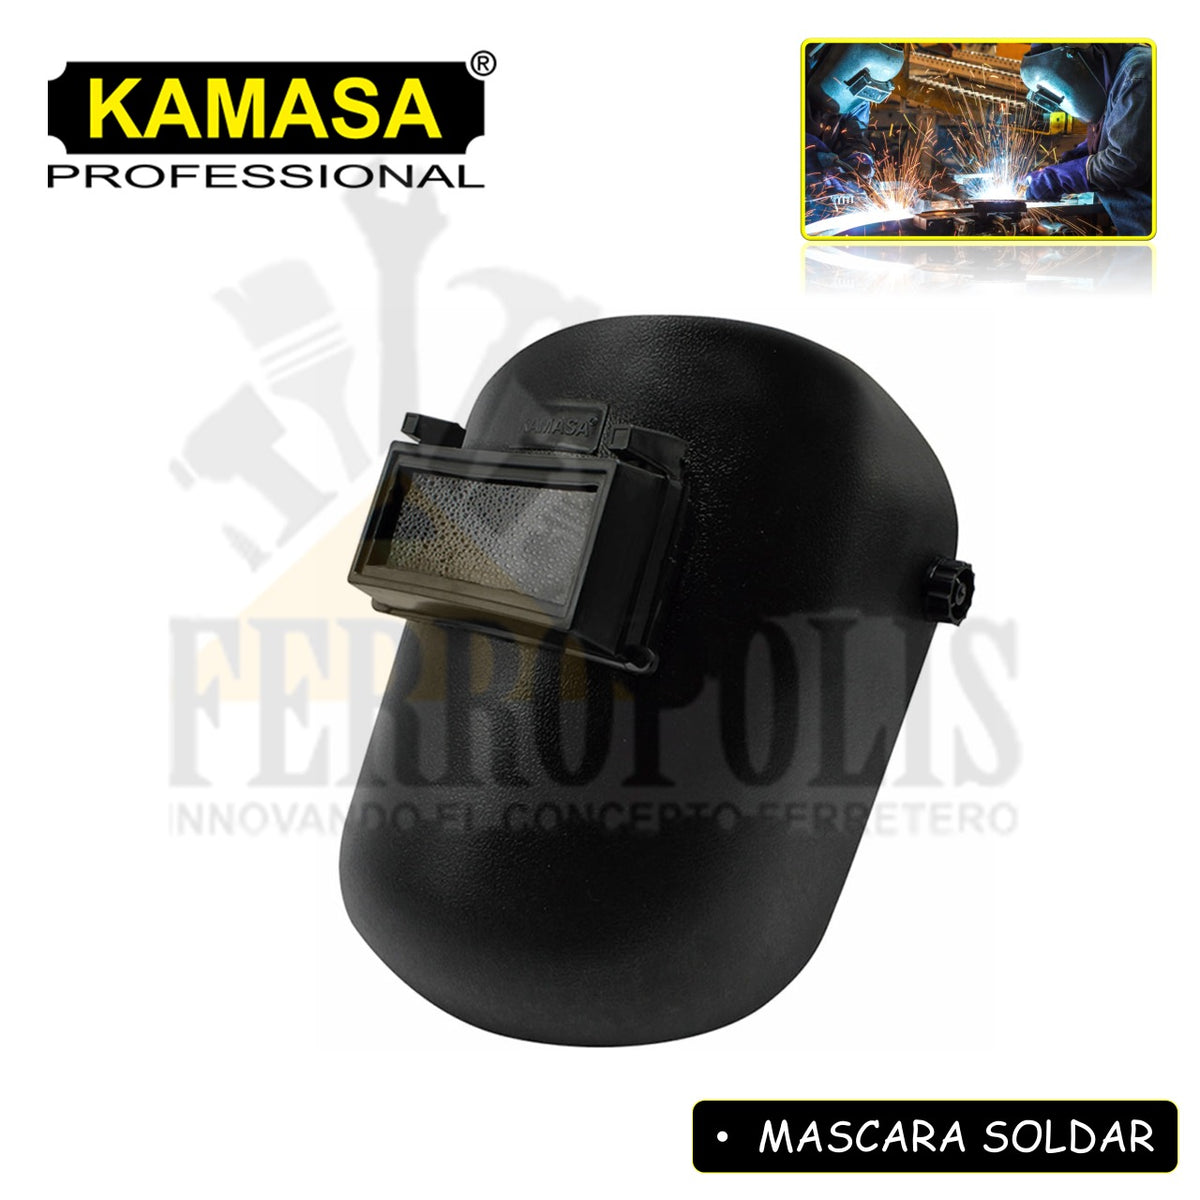 MASCARA SOLDAR CLASICA KAMASA – Ferropolis